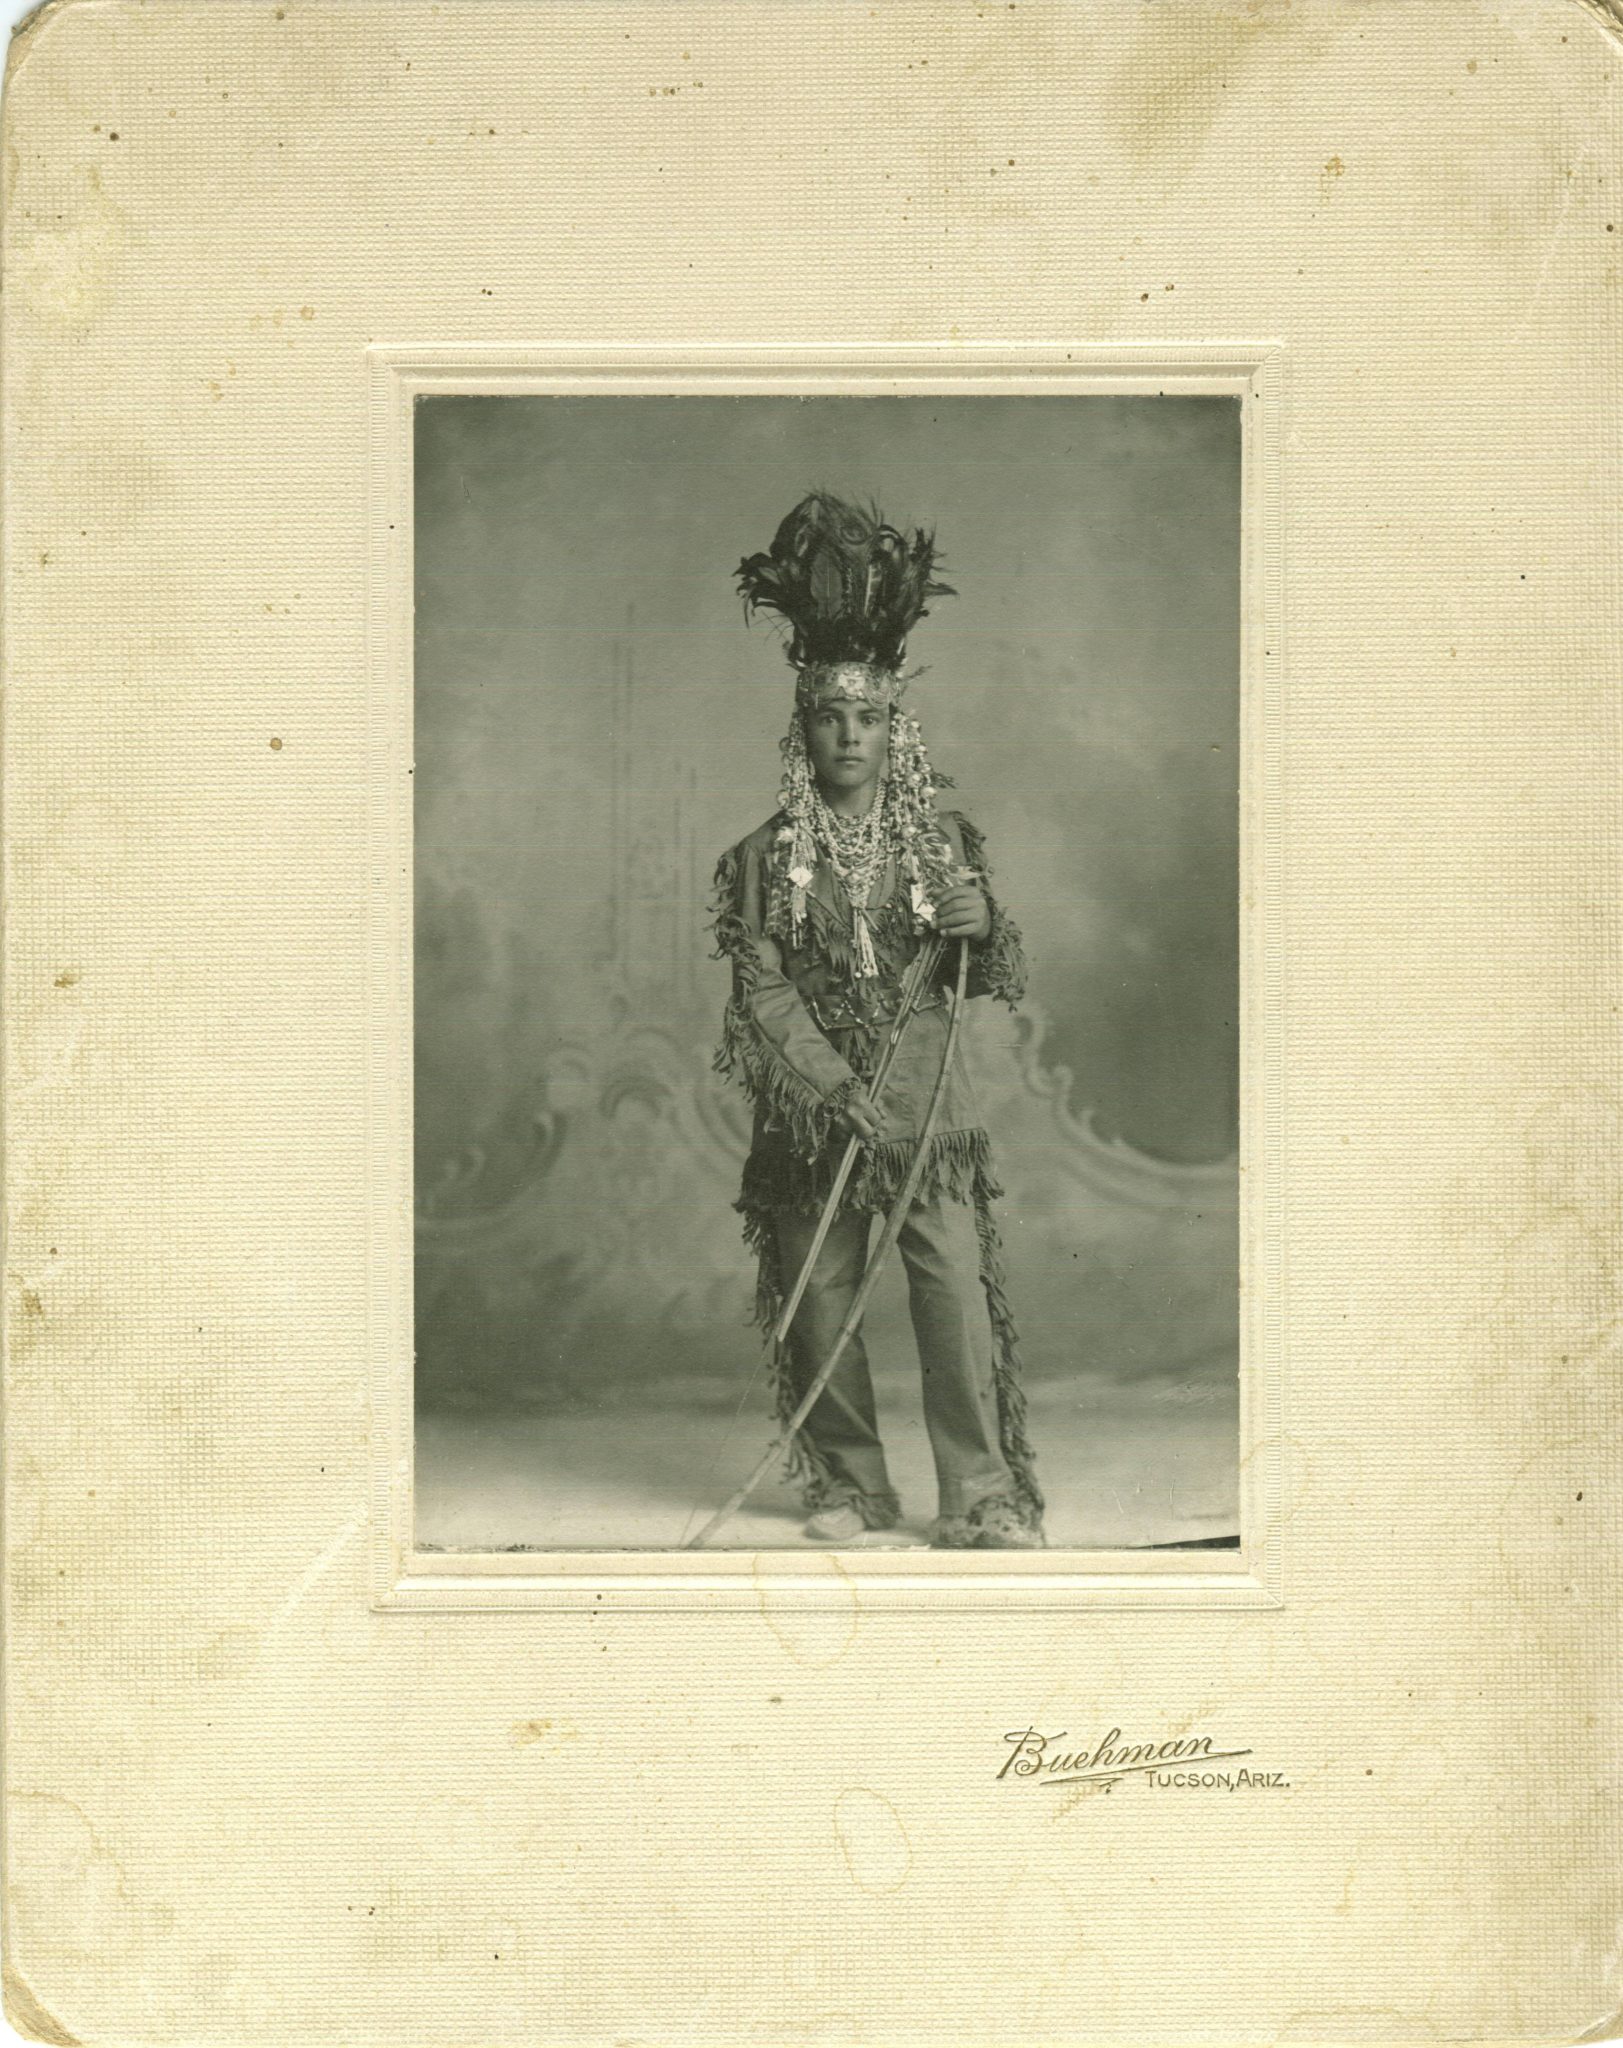 Albert Warner dressed in Native American Indian attire Buehman Photo